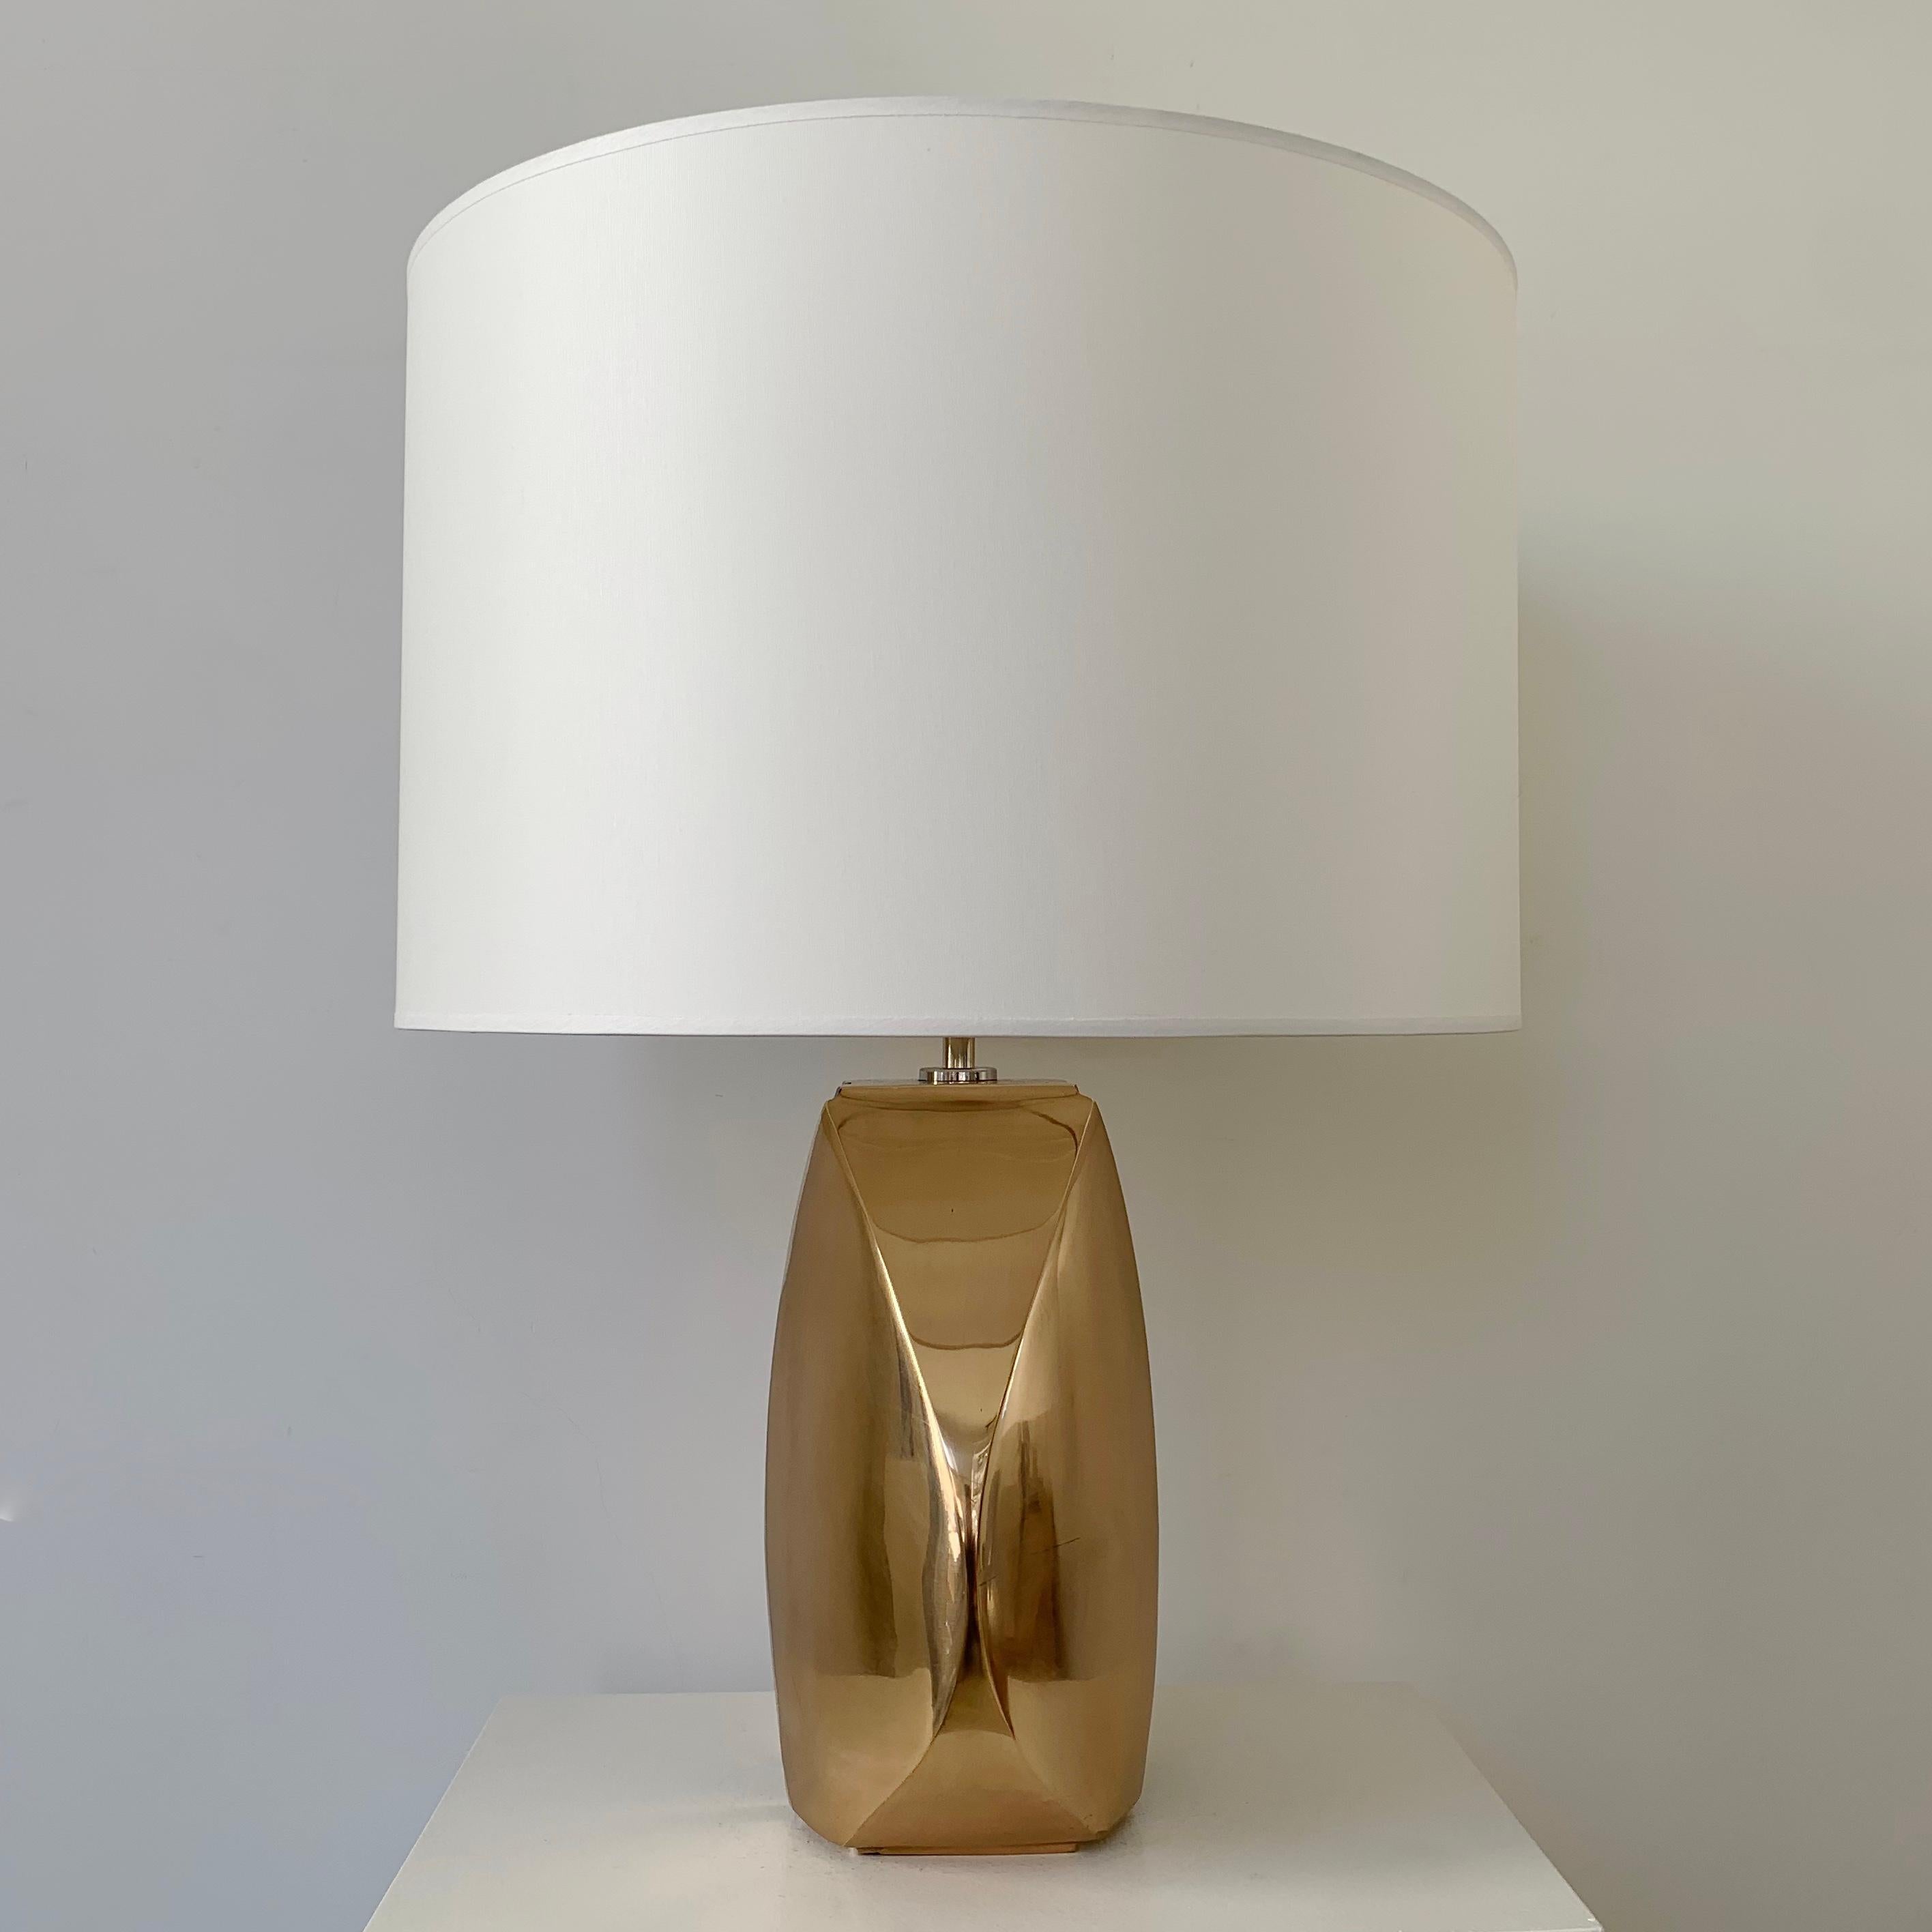 Late 20th Century Esa Fedrigolli Signed Bronze Table Lamp, circa 1970, Italy For Sale